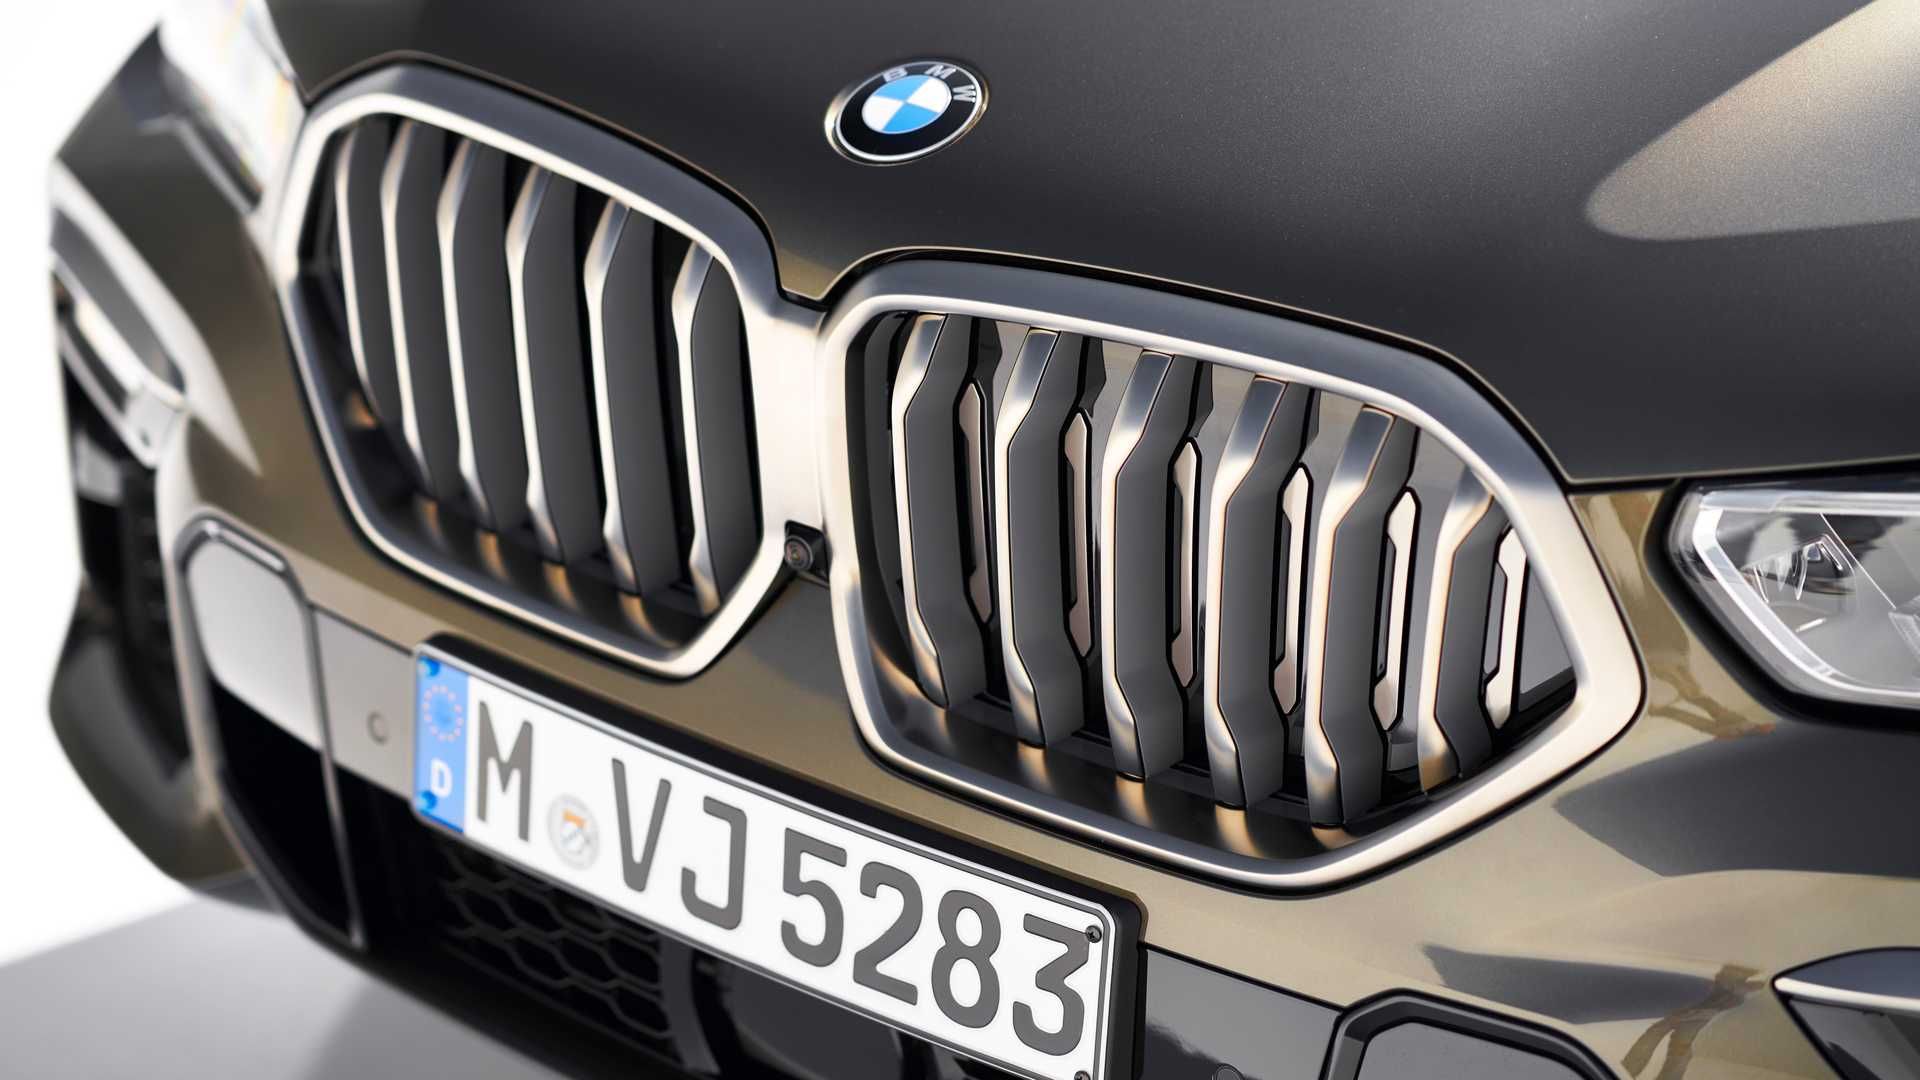 2020 BMW X6 / بی ام و ایکس 6 مدل ۲۰۲۰